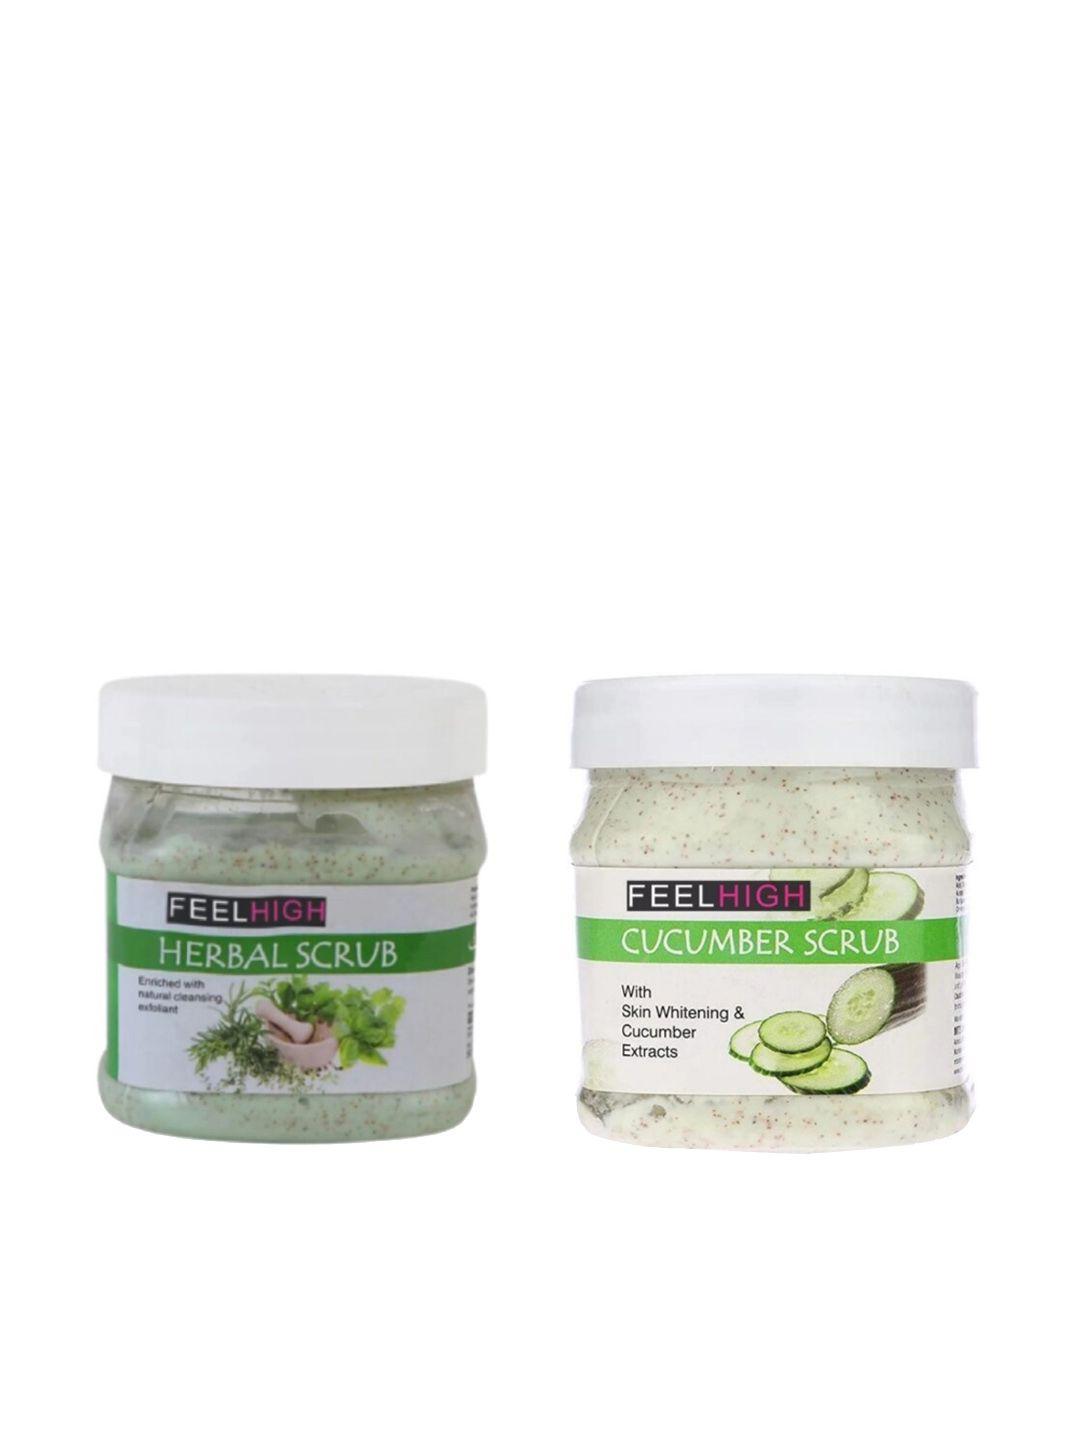 feelhigh set of 2 herbal & cucumber scrubs 500ml each